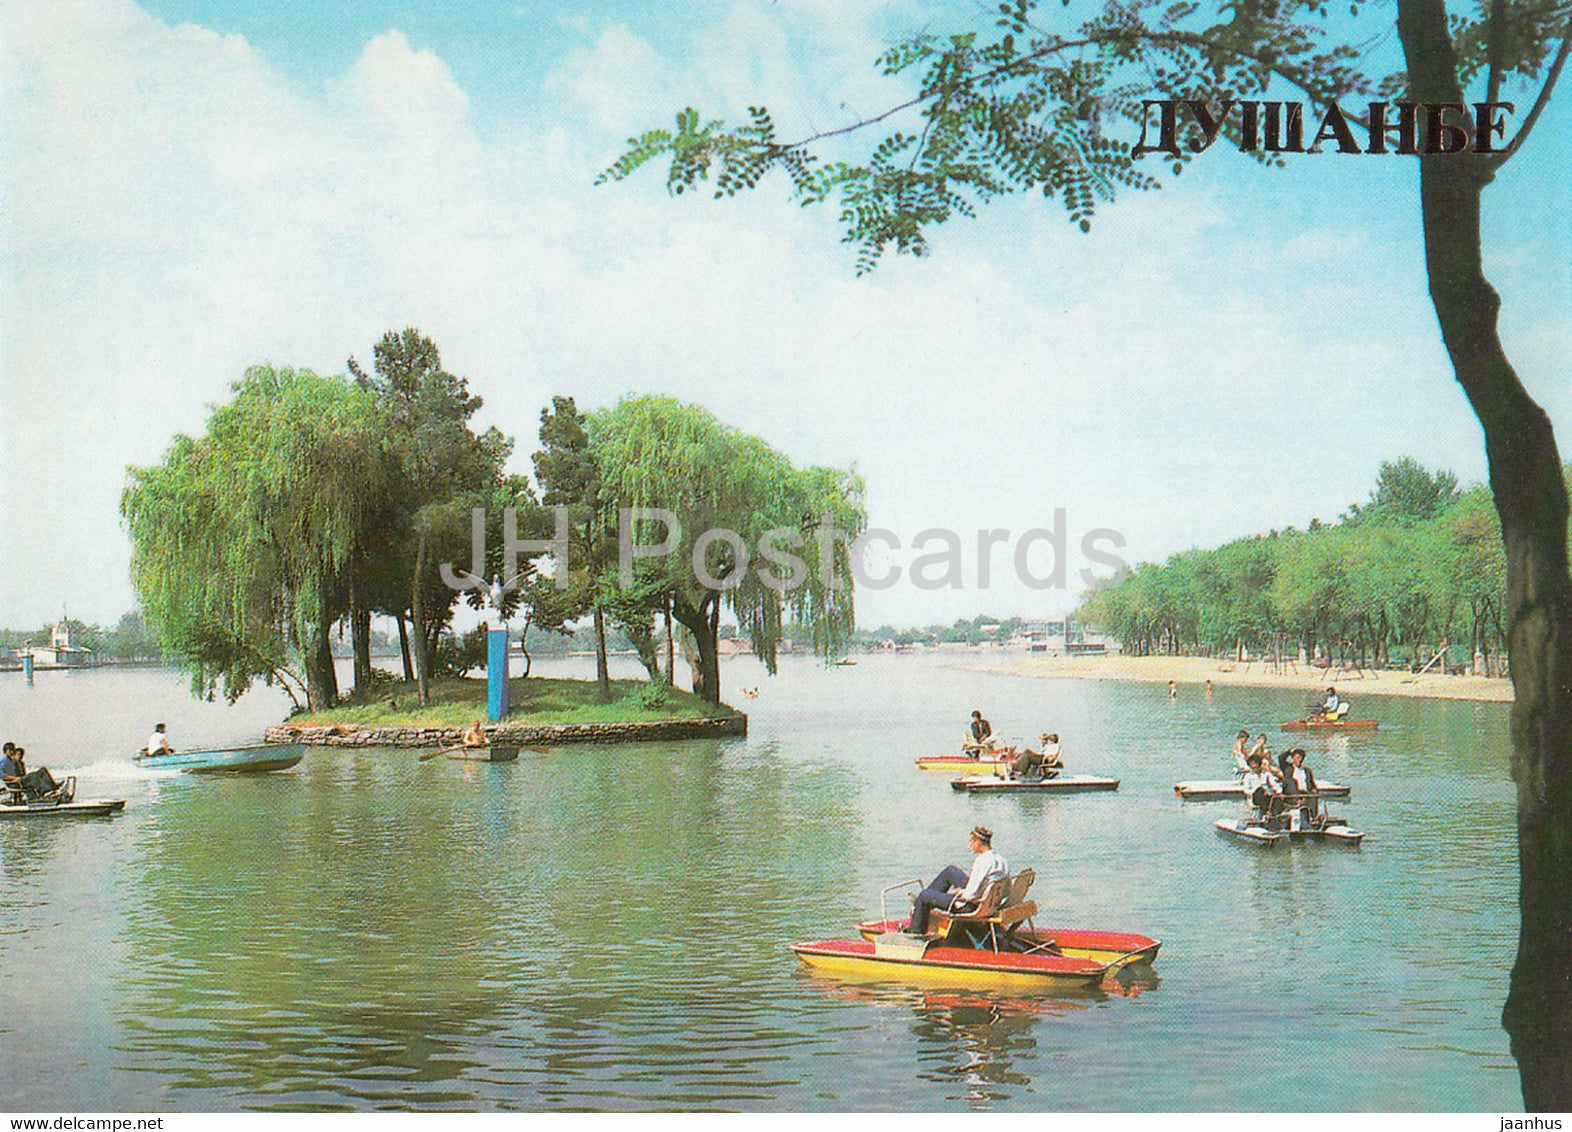 Dushanbe - Komsomol Lake - pedal boats - 1985 - Tajikistan USSR - unused - JH Postcards